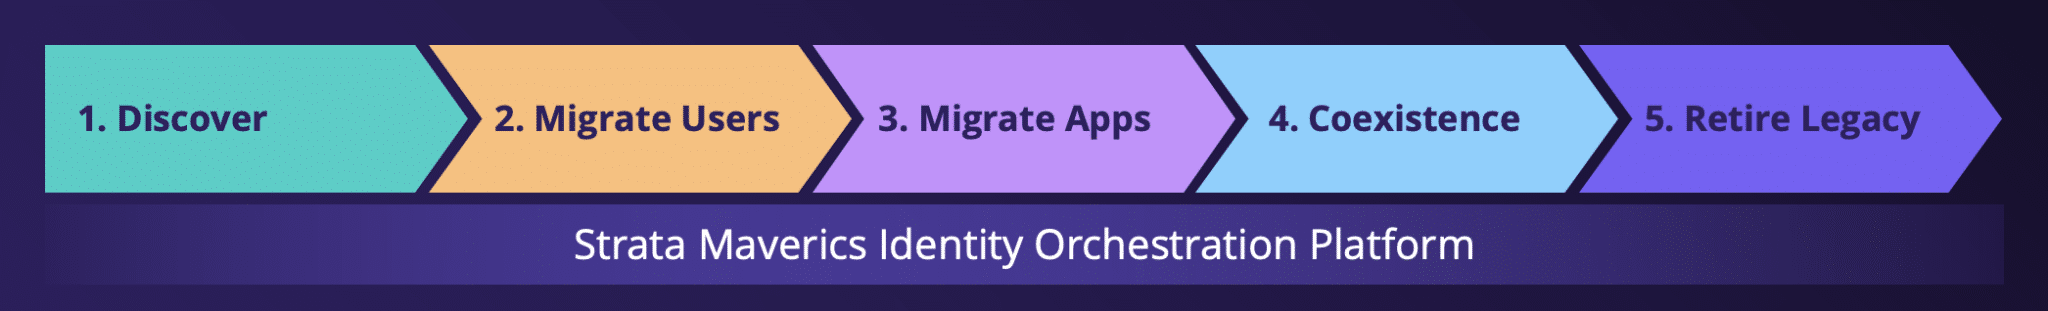 Illustration of 5 step app migration process